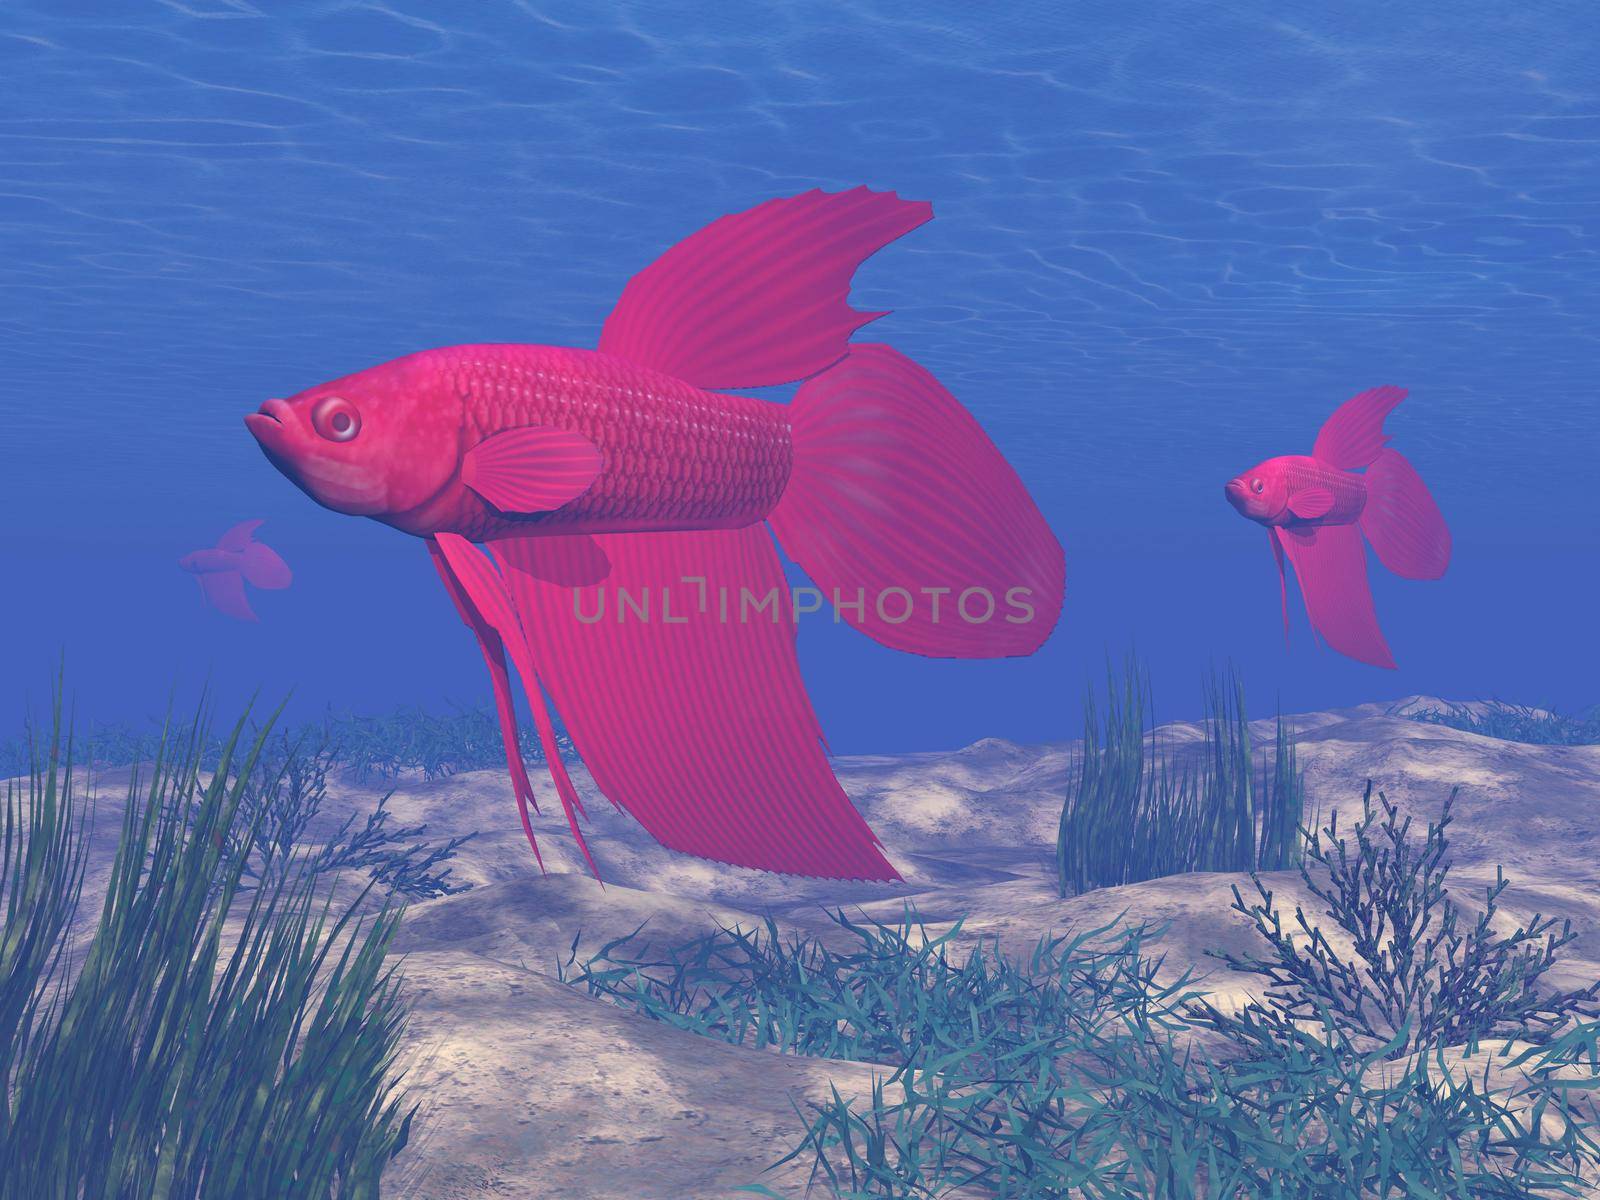 Red betta fishes in deep blue underwater